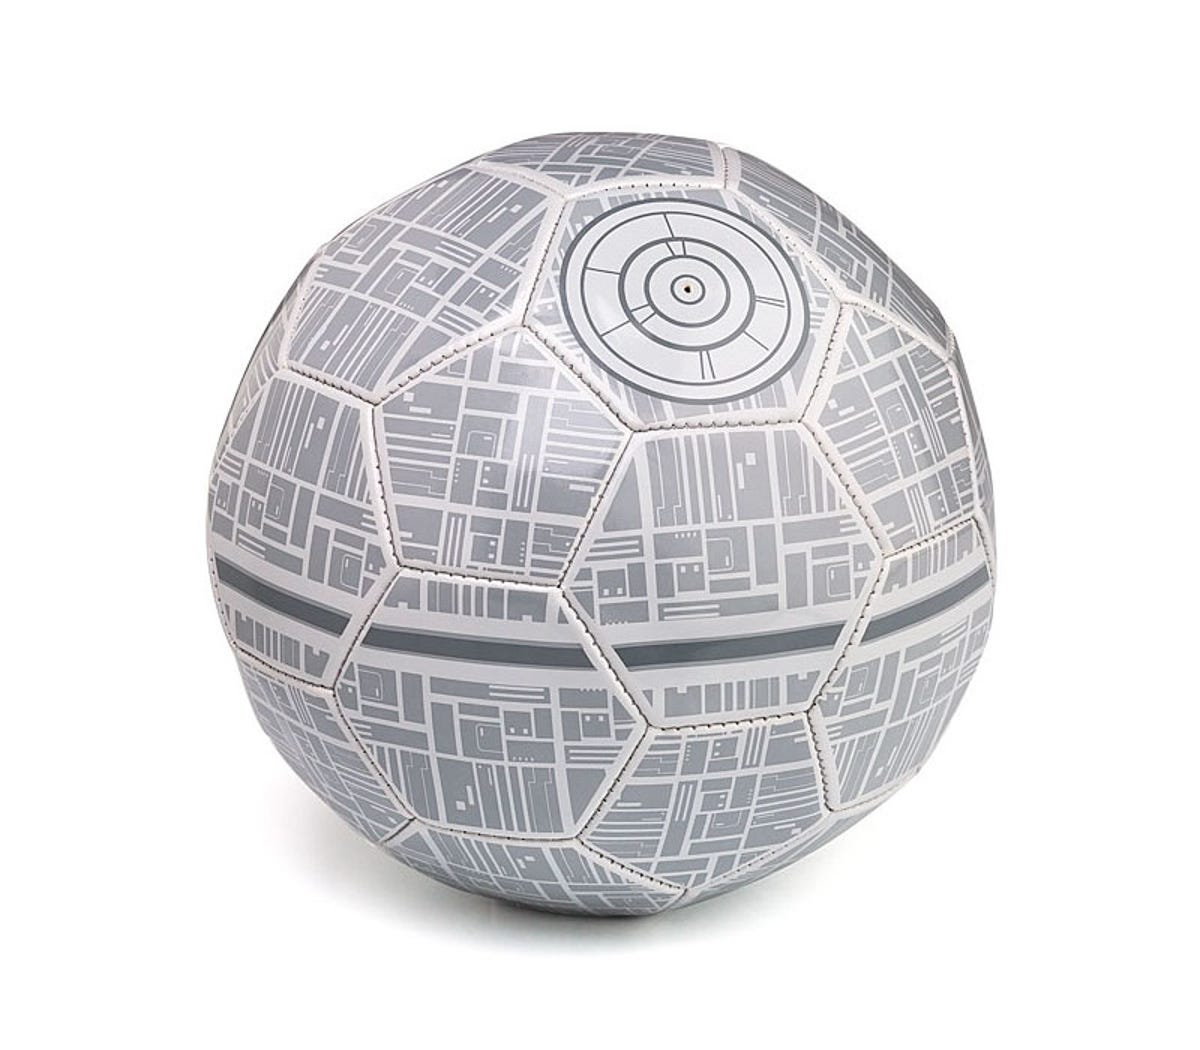 Death Star soccer ball